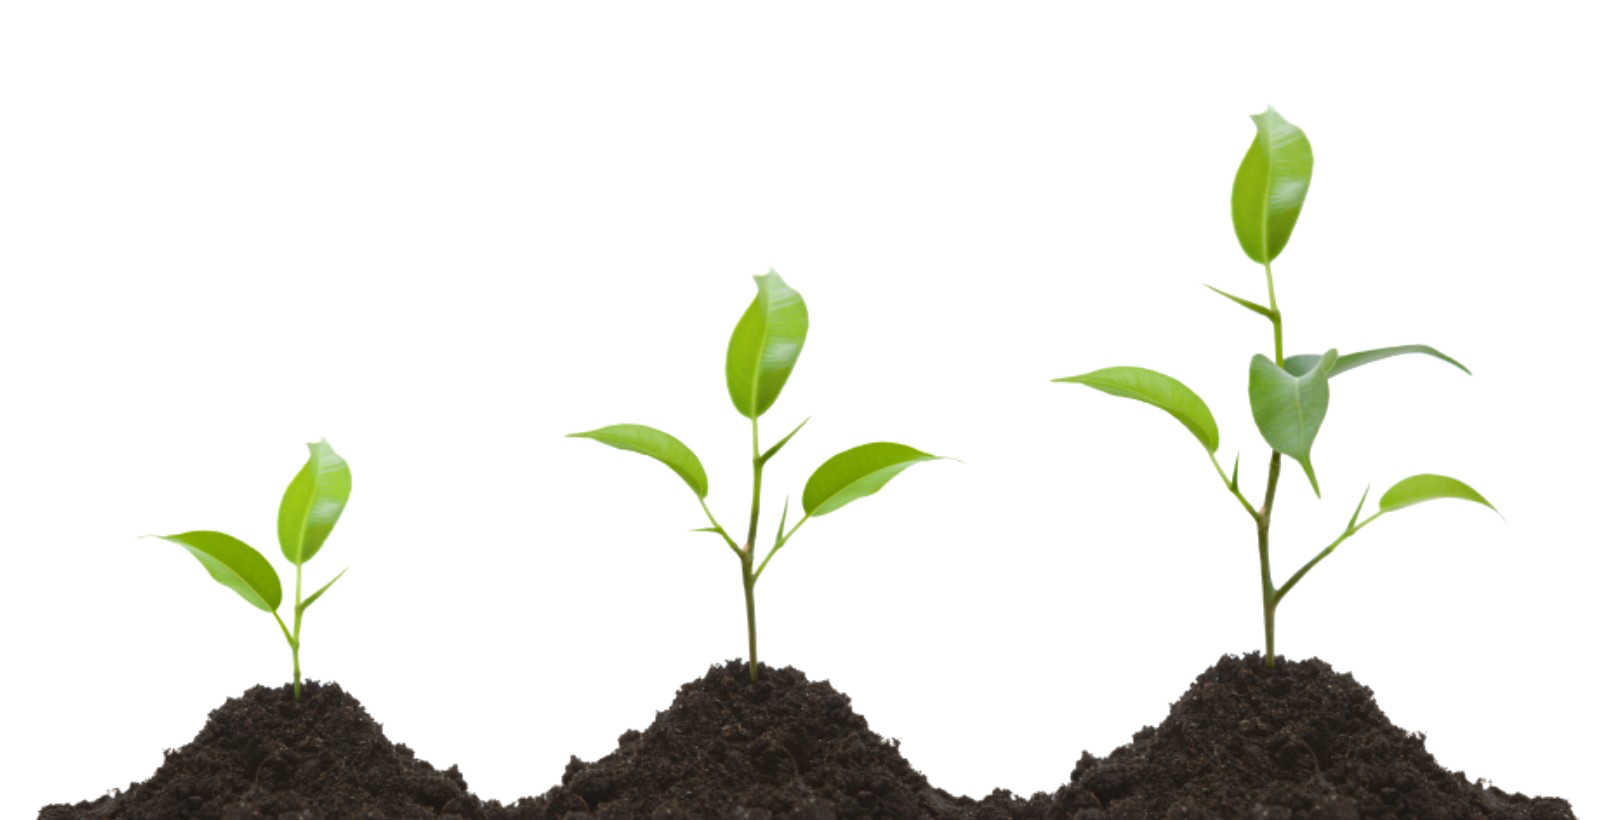 Growing Plant Image Free Download Image PNG Image